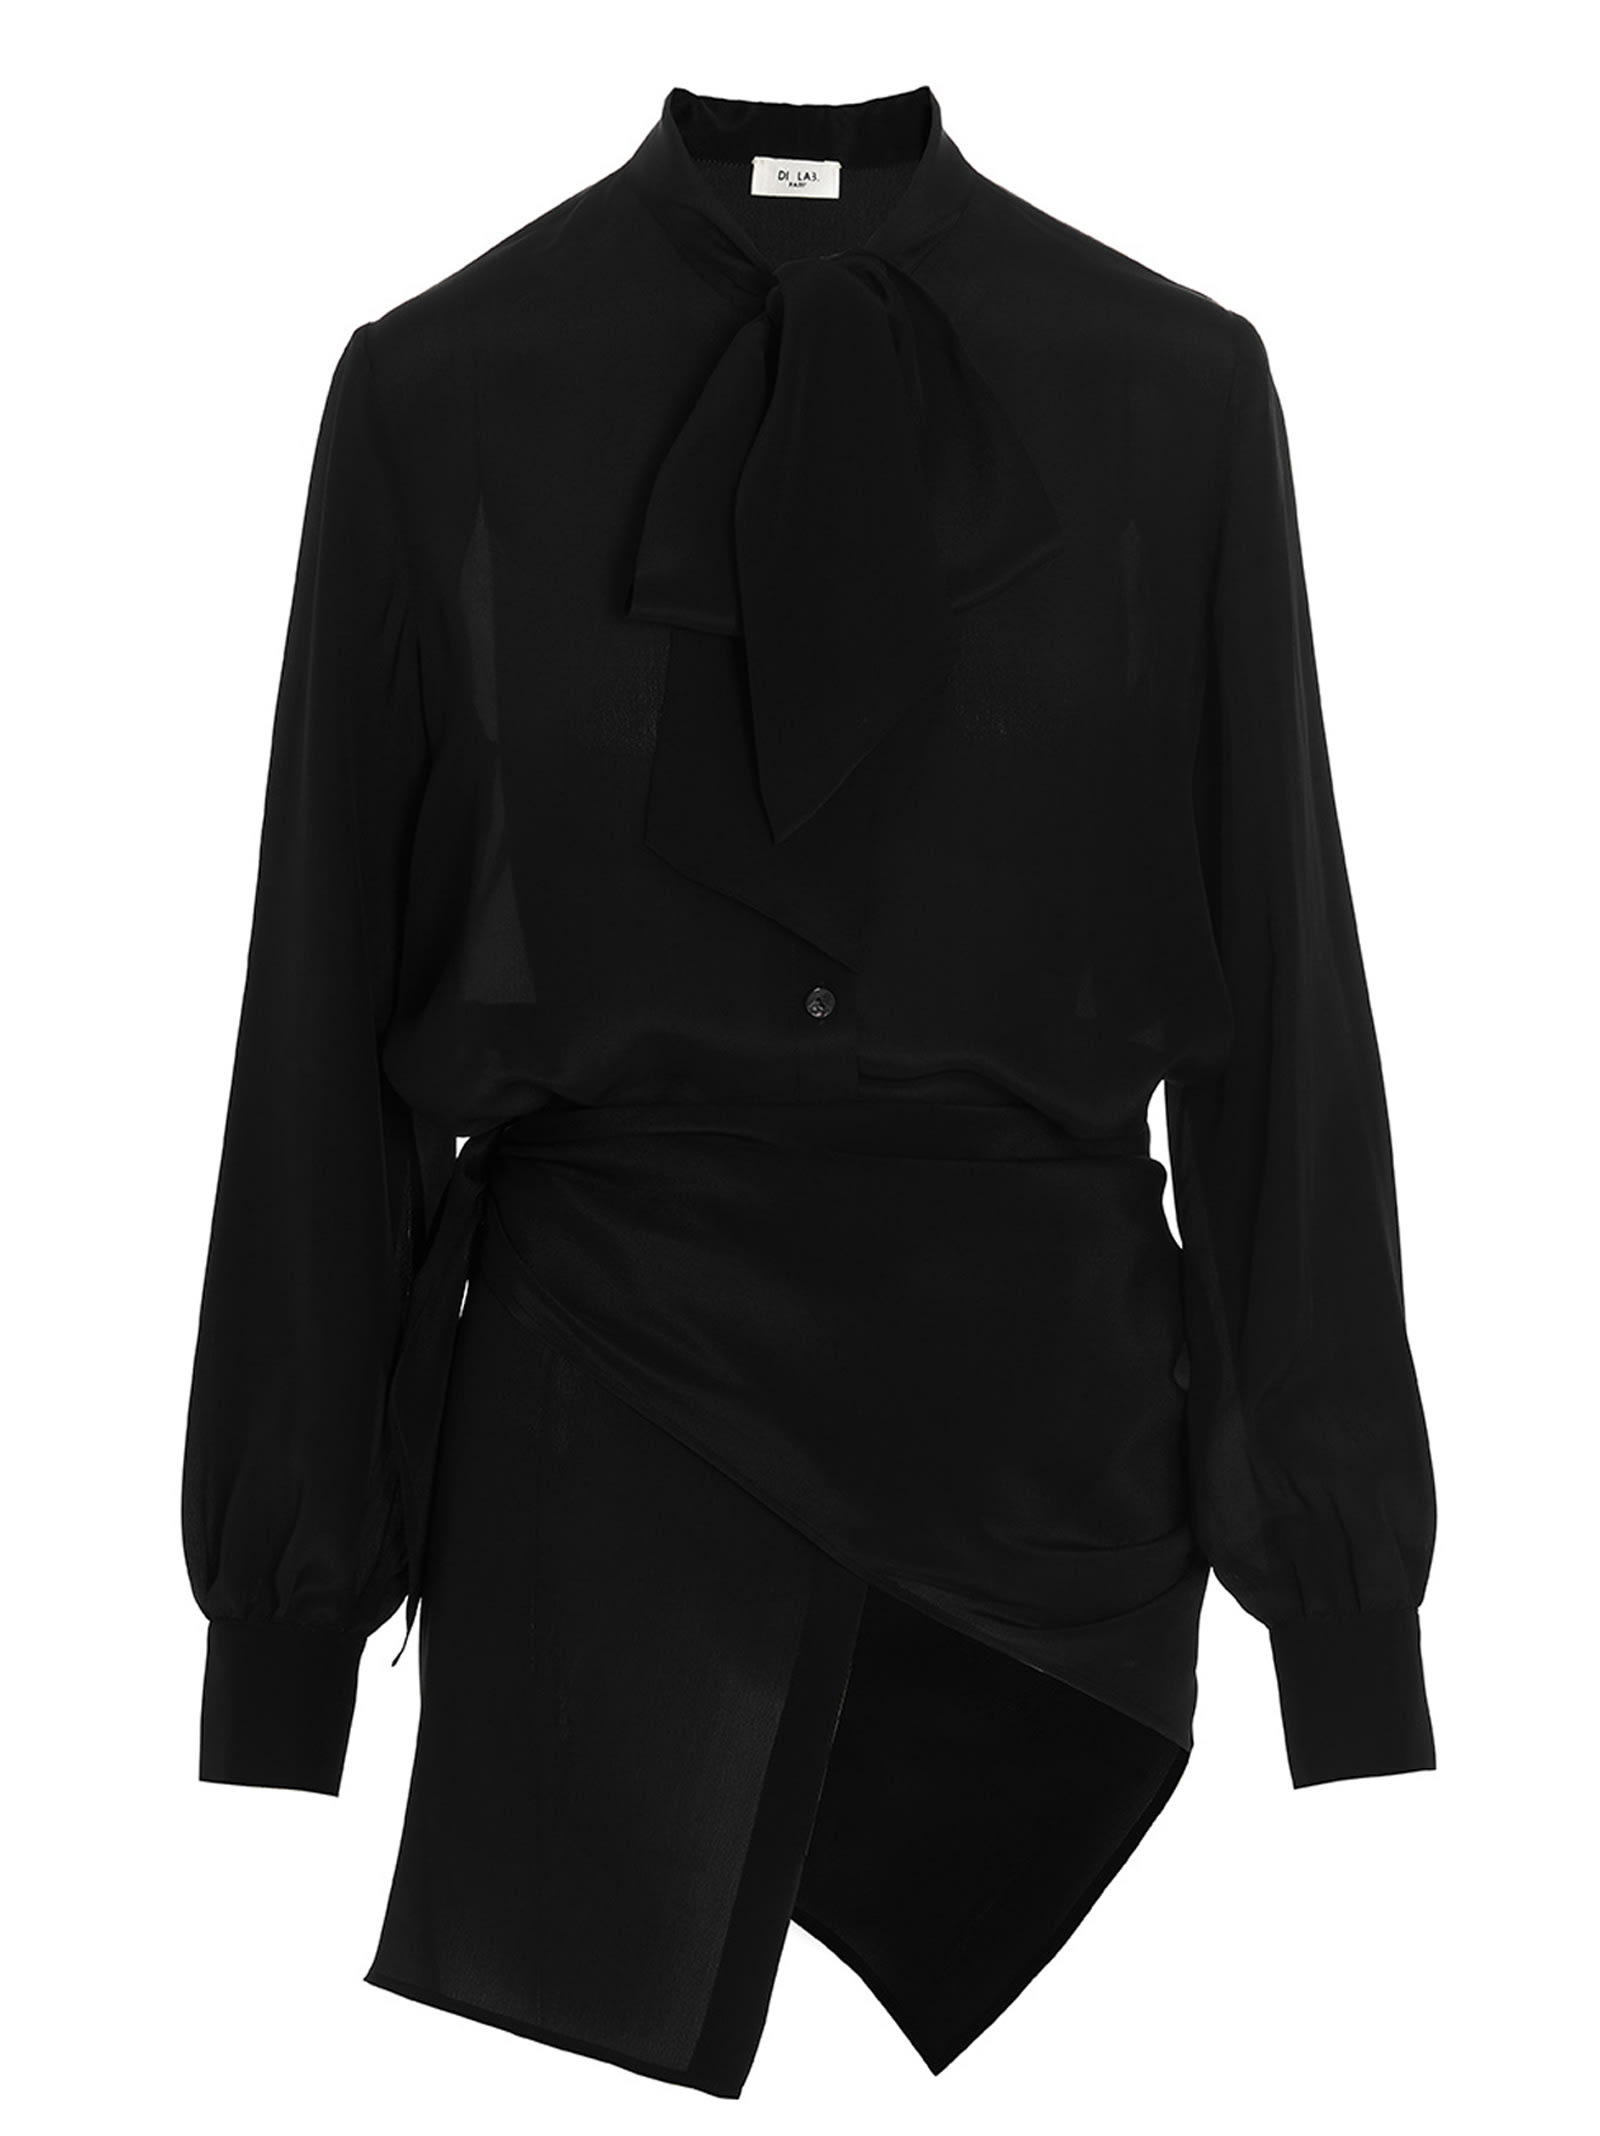 Shop Di.la3 Pari' Asymmetric Shirt In Black